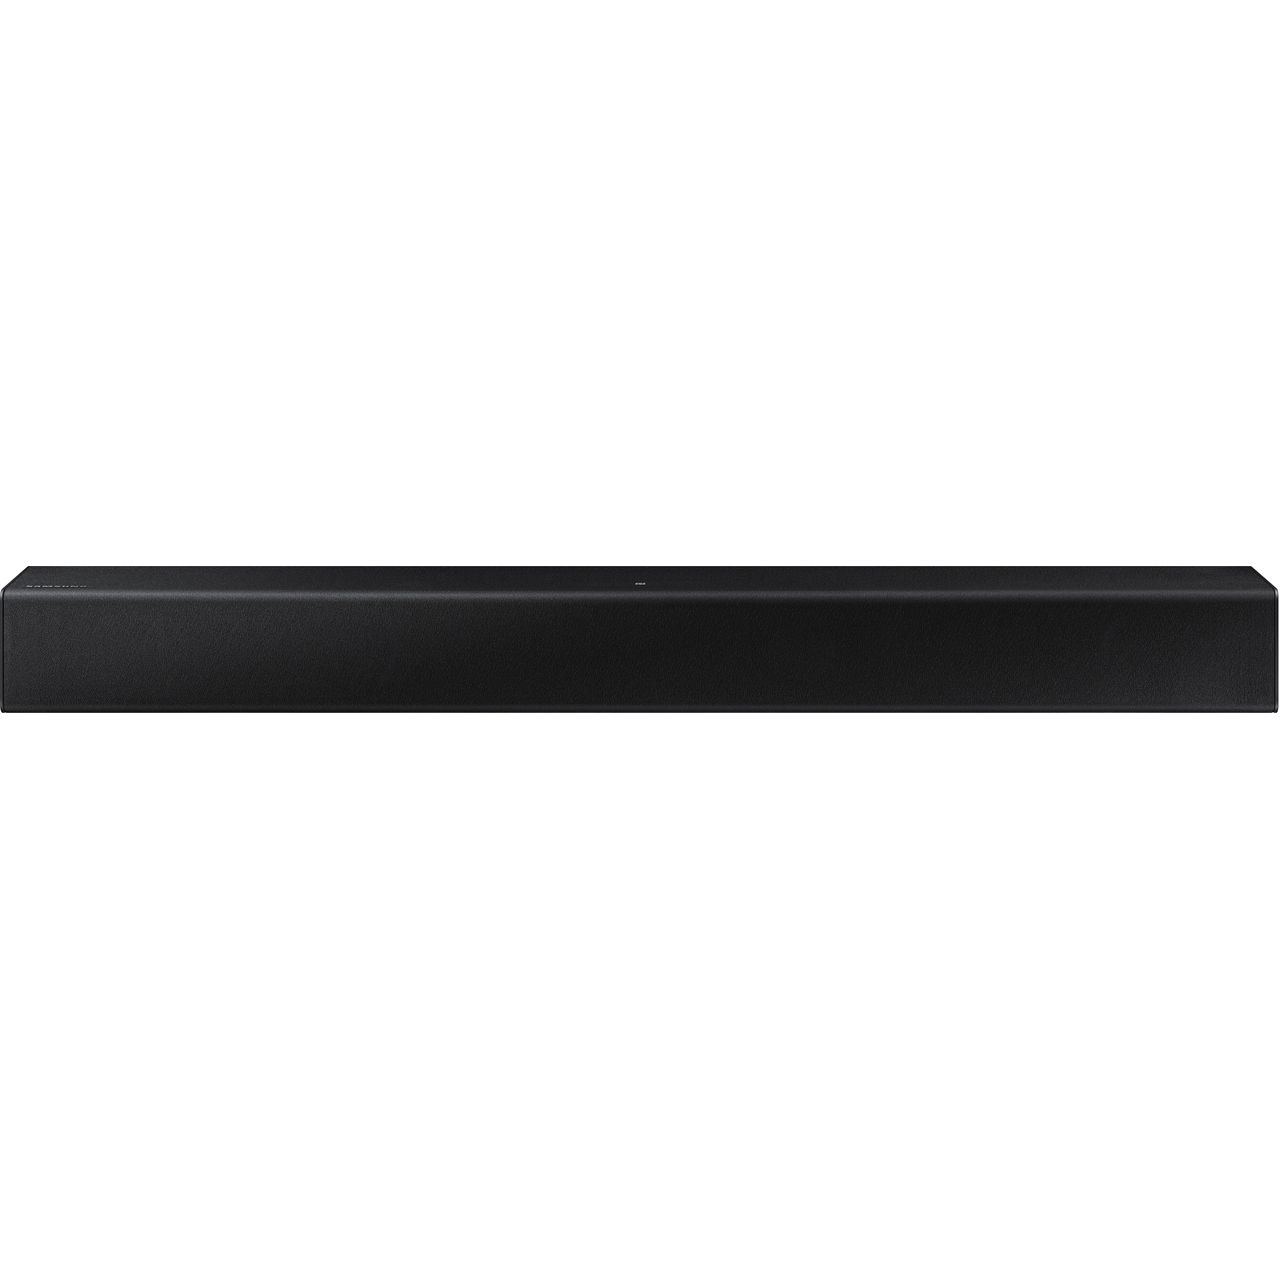 Samsung HW-T400 Bluetooth 2 Soundbar with Built-in Subwoofer specs